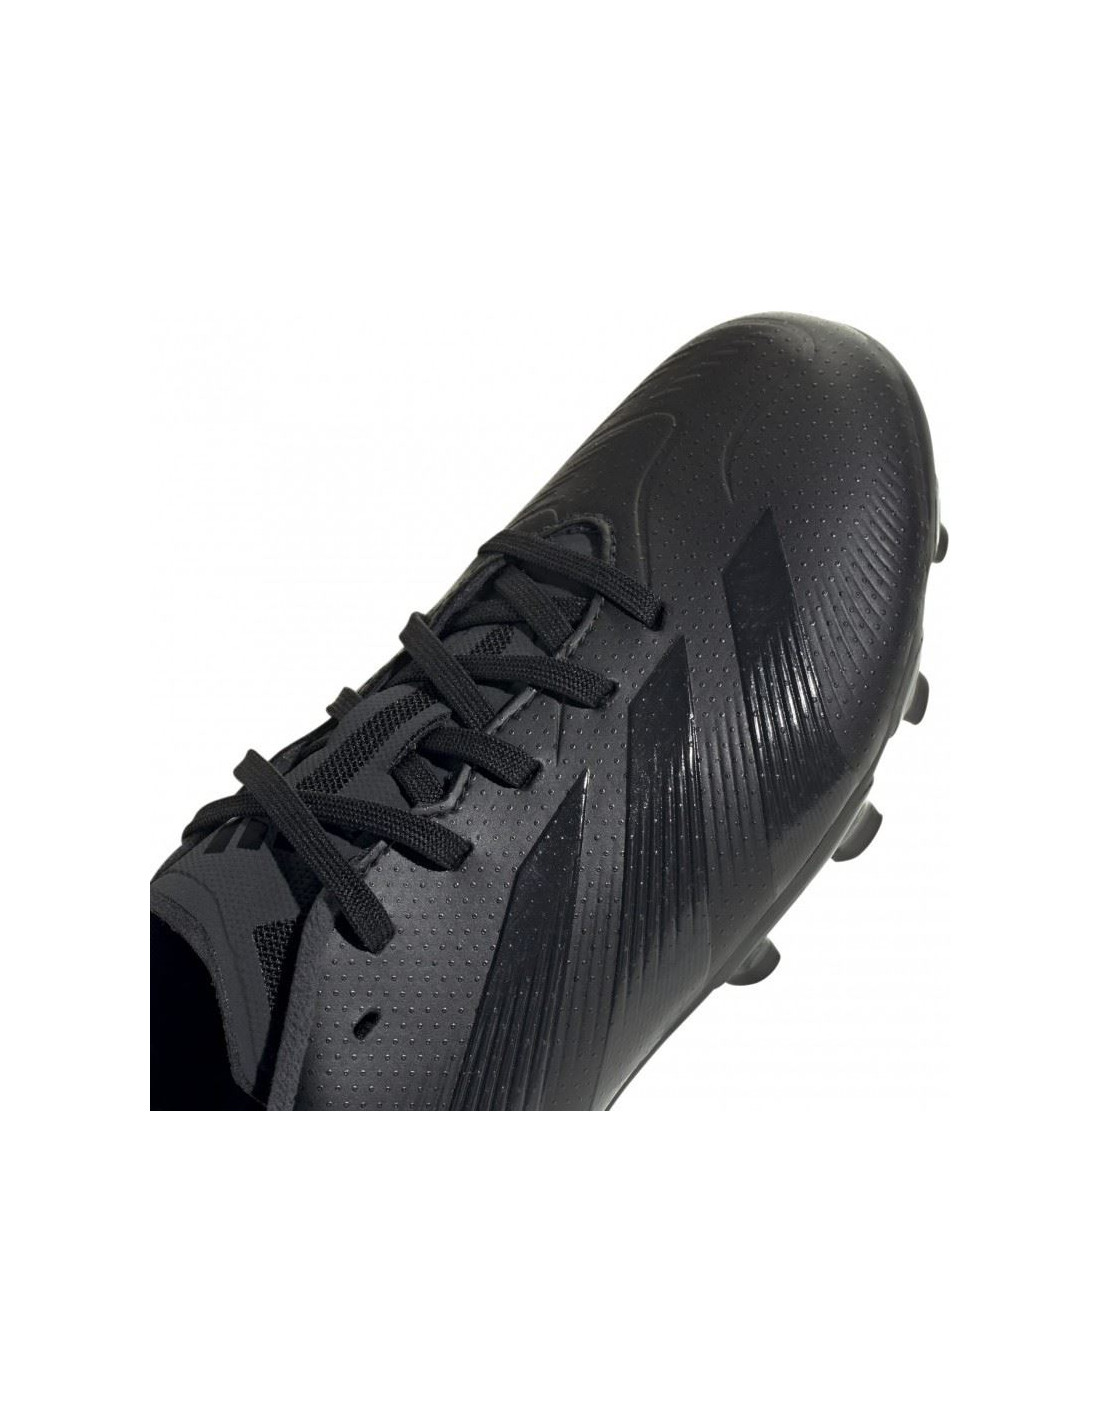 adidas Predator League MG Football Boots Black